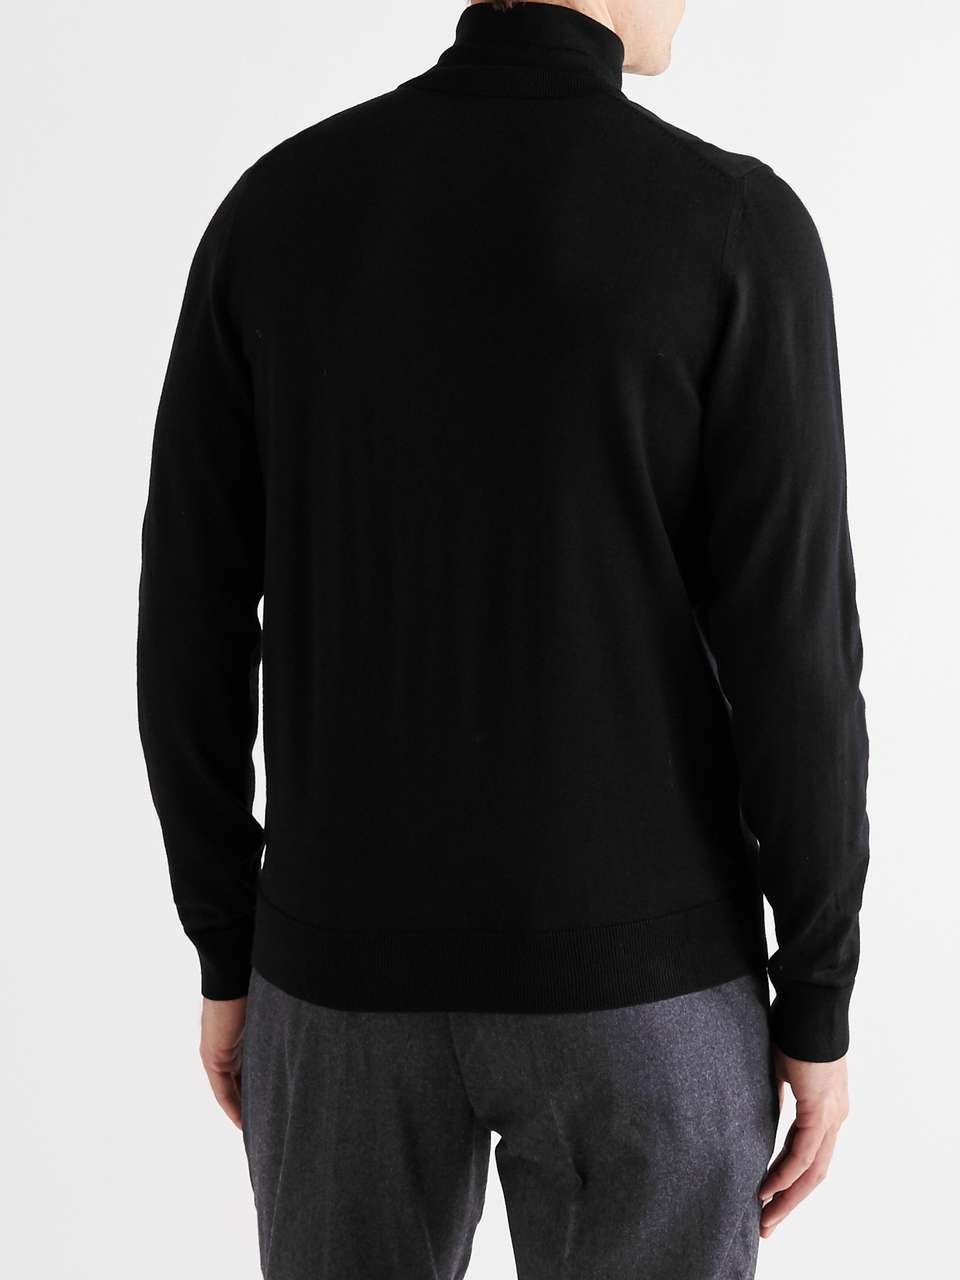 MR P. Slim-Fit Merino Wool Rollneck Sweater for Men | MR PORTER